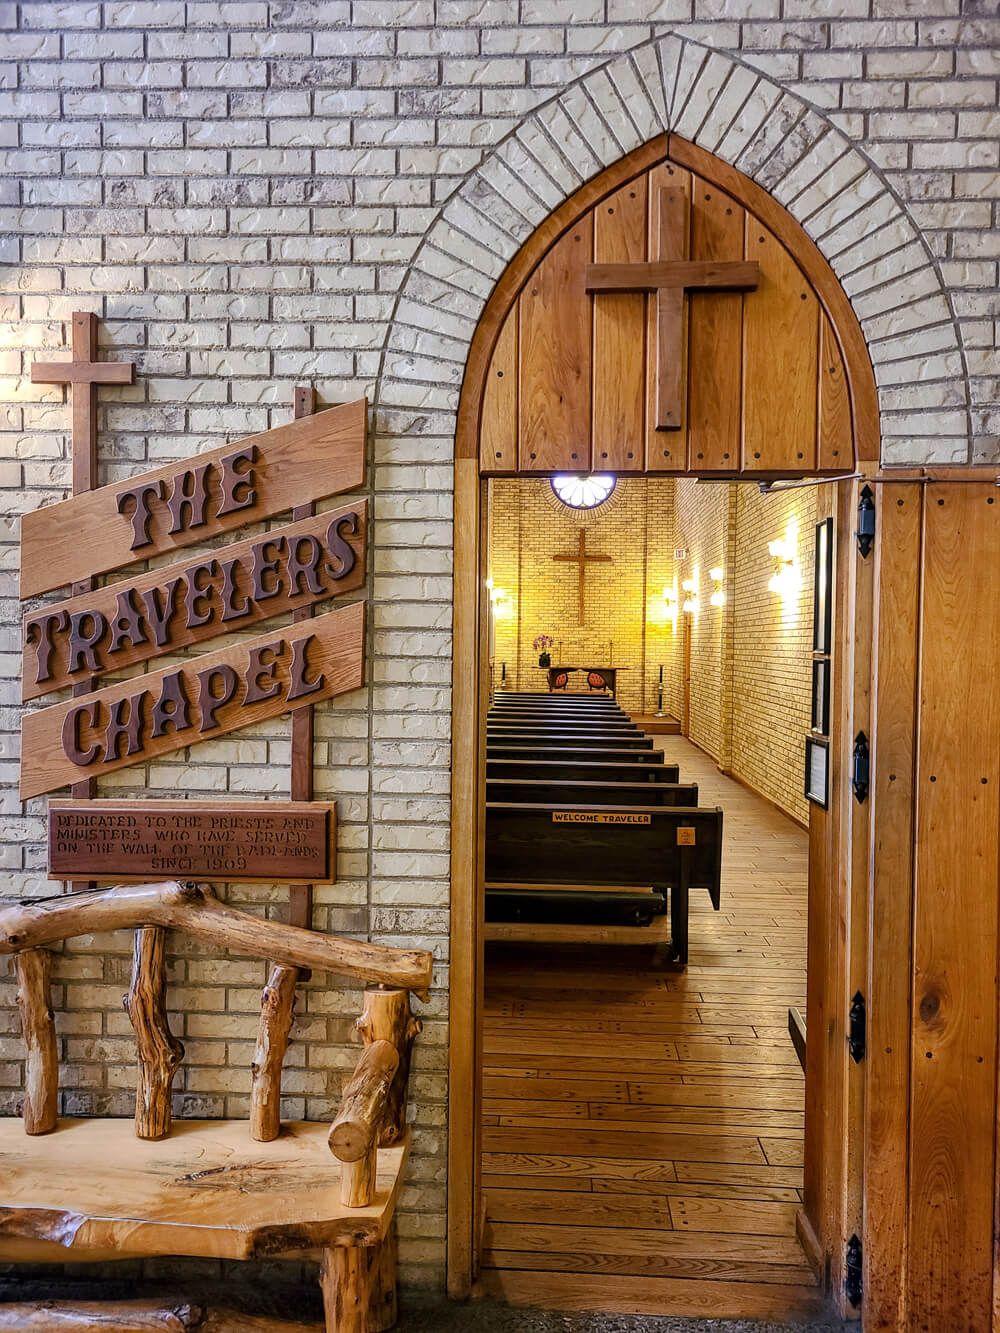 The Travelers Chapel